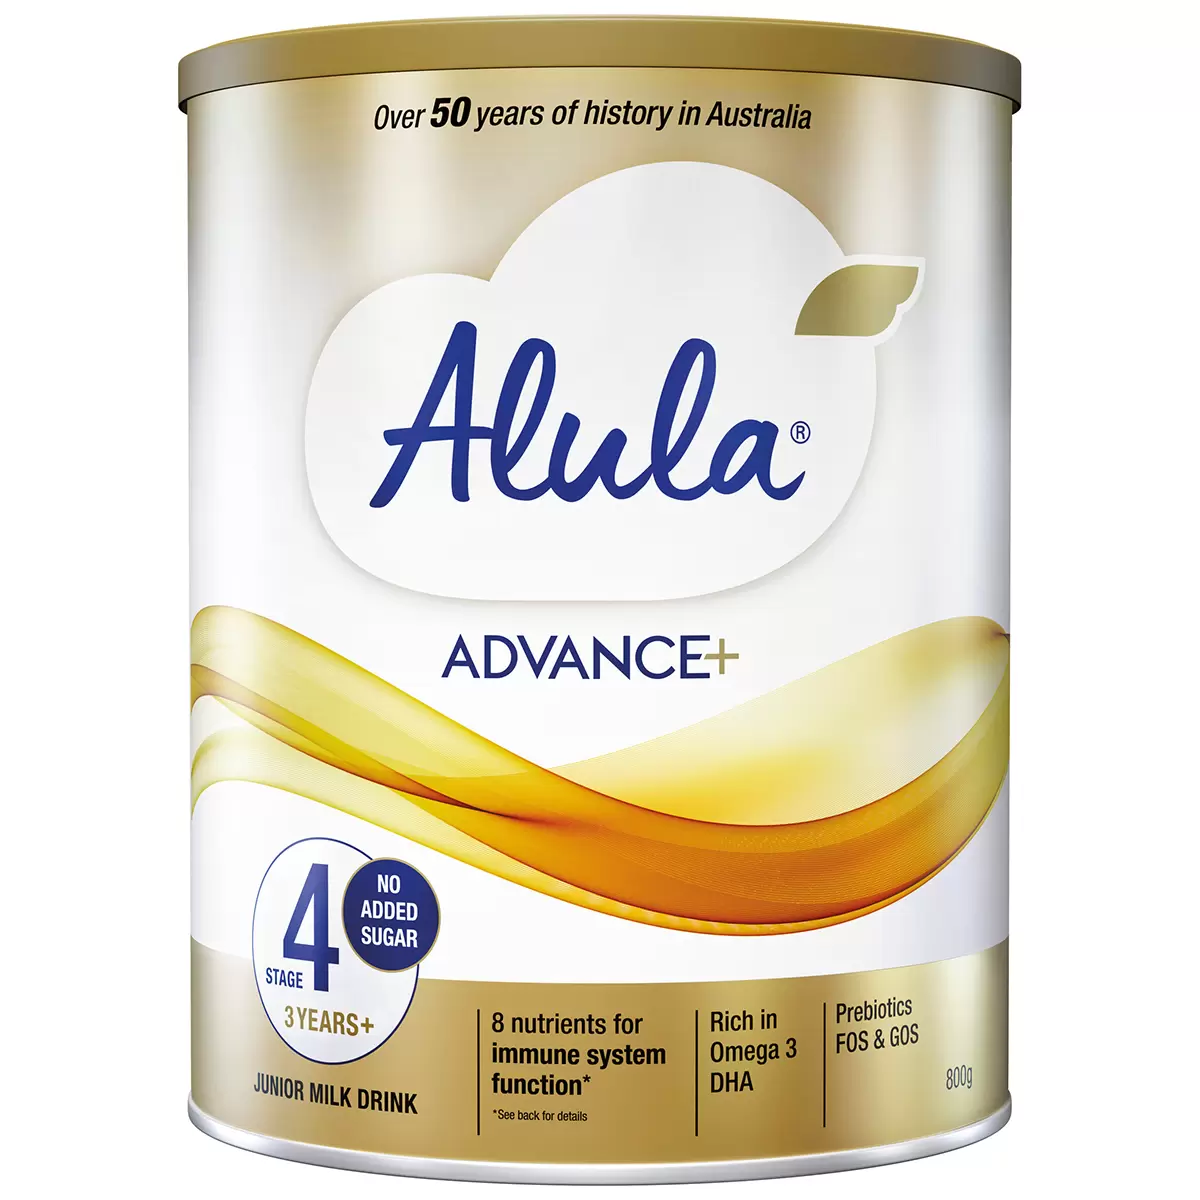 Alula Advance+ Stage 4 3 x 800g